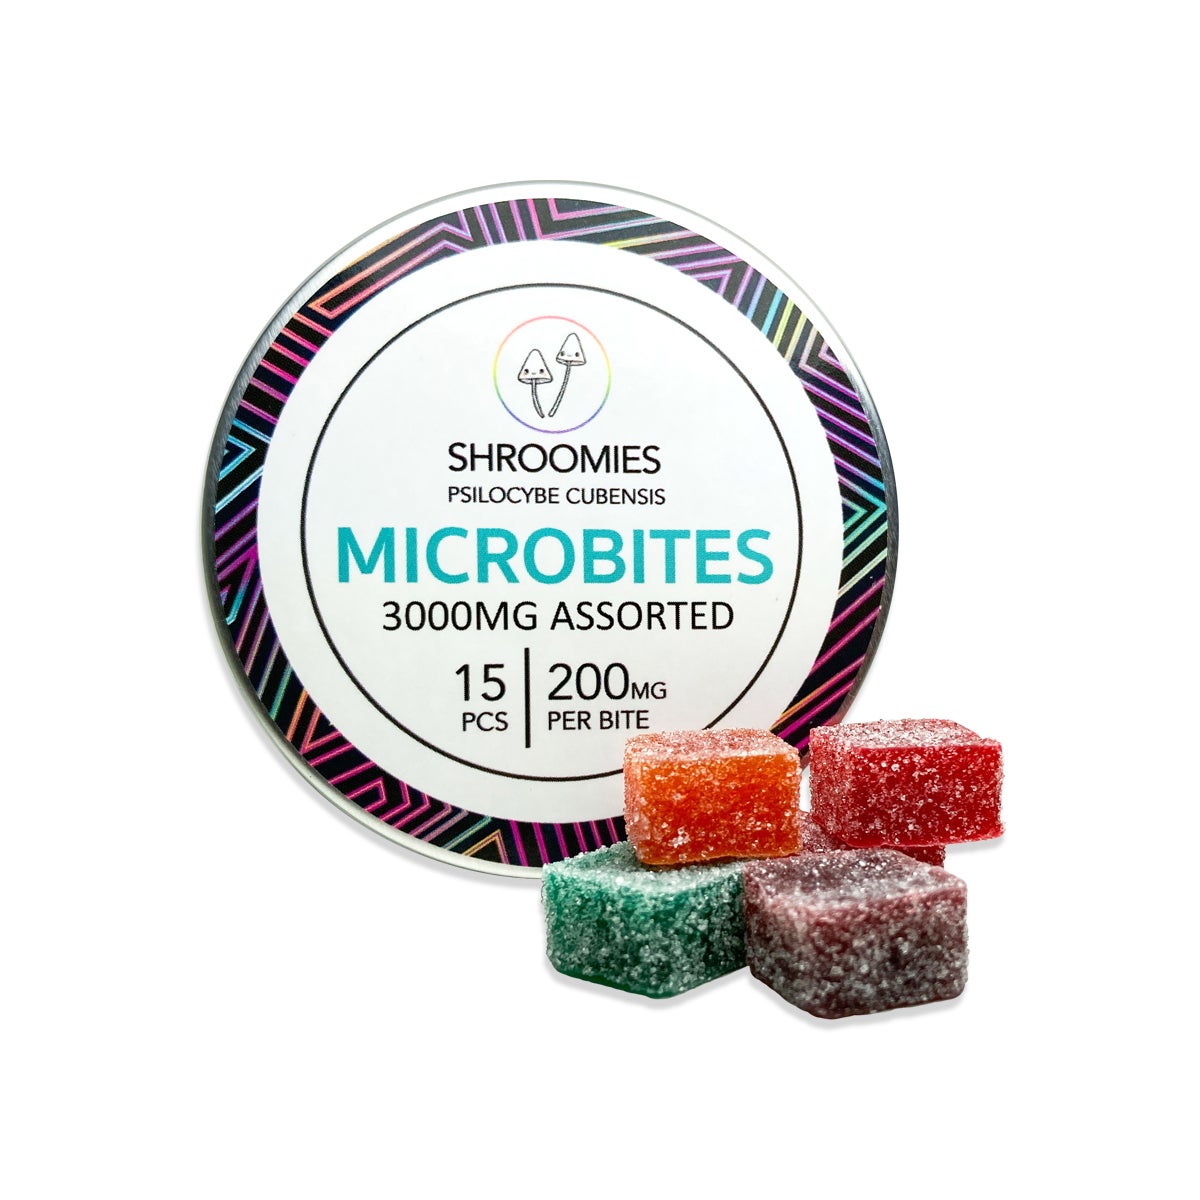 Shroomies - Microbites 3000mg Assorted Psilocybin